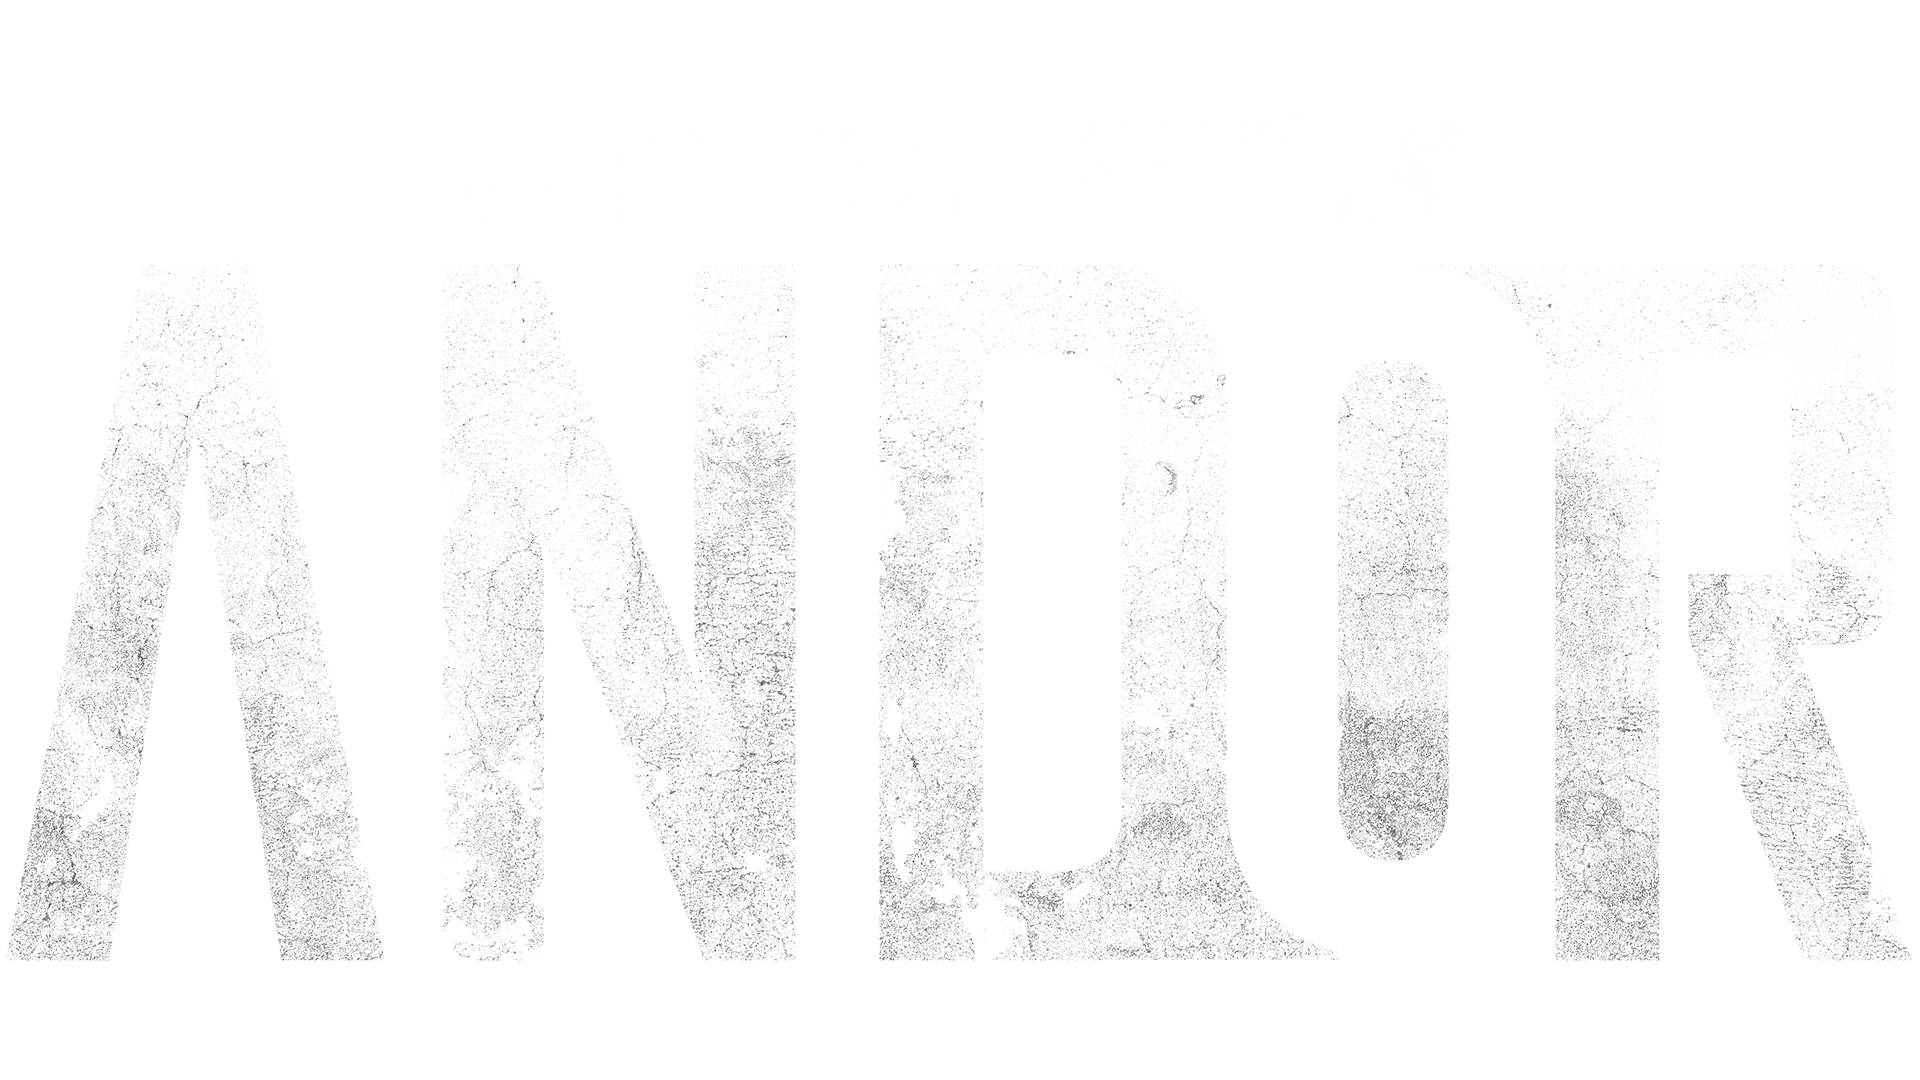 Star Wars: Andor Temporada 1 - assista episódios online streaming